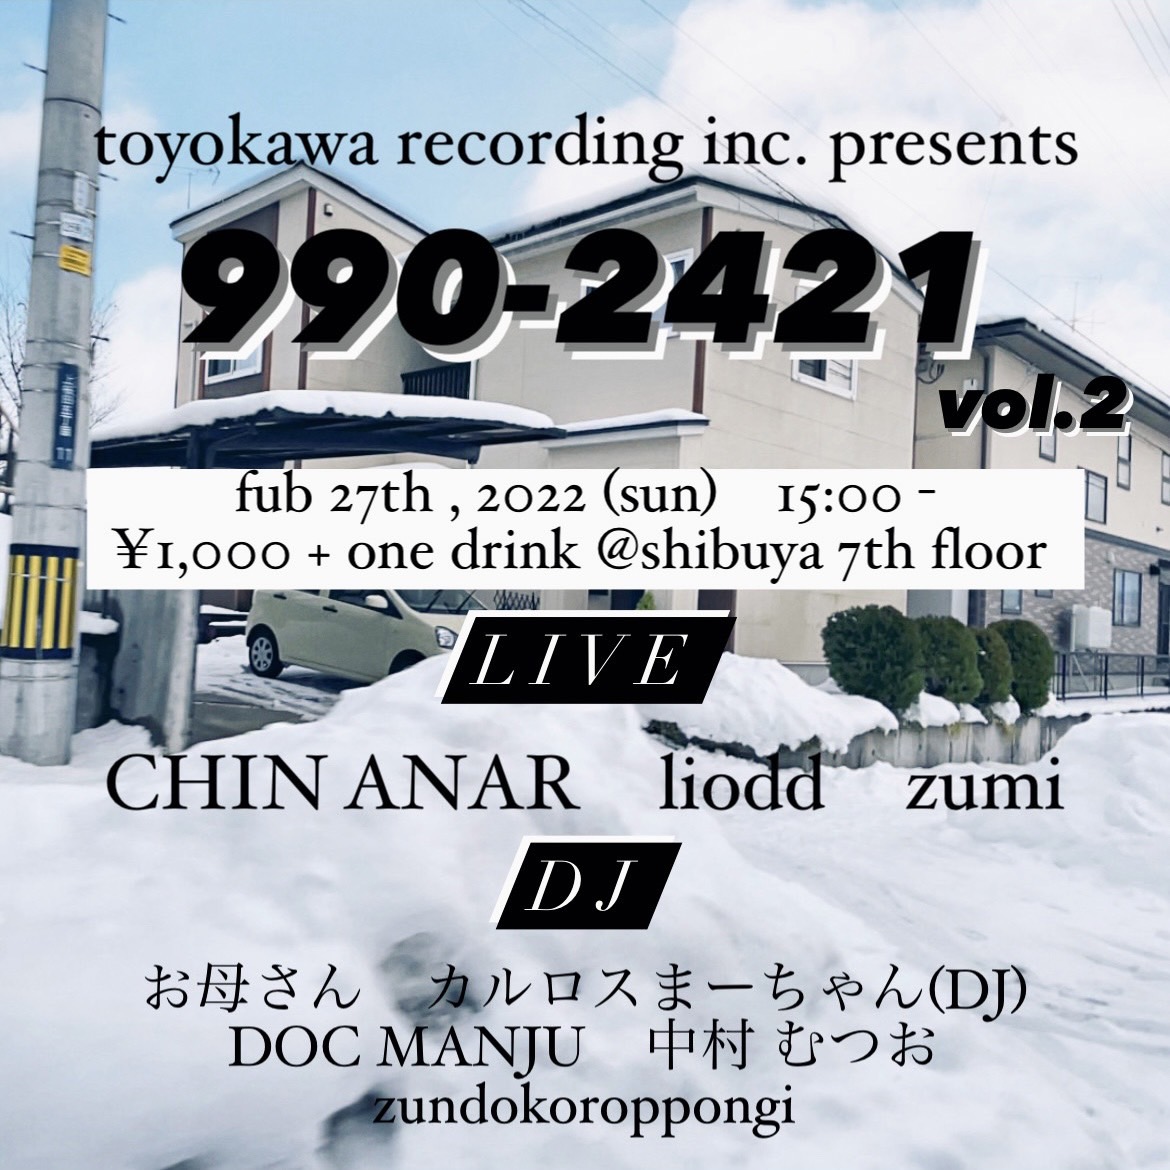 toyokawa recording inc. presents “ 990-2421 “  vol.2